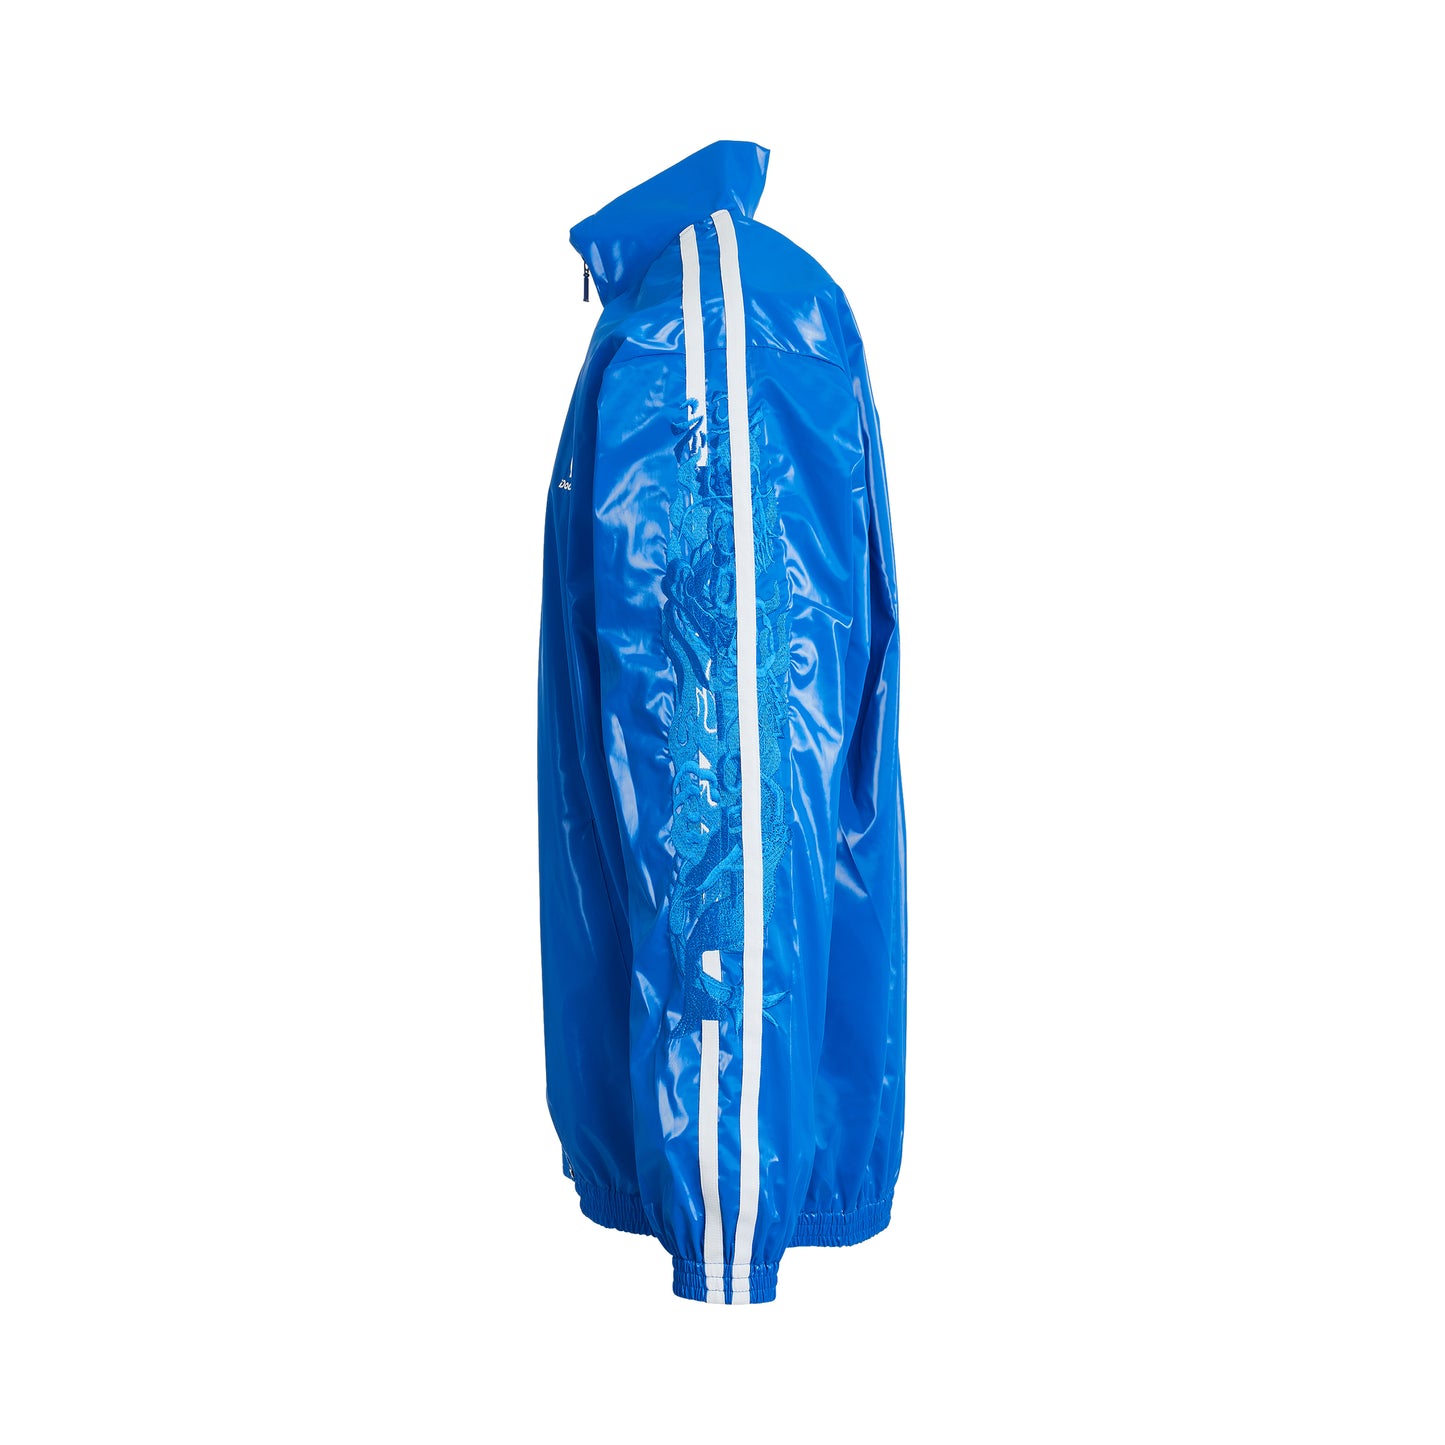 Laminate Track Jacket in Blue